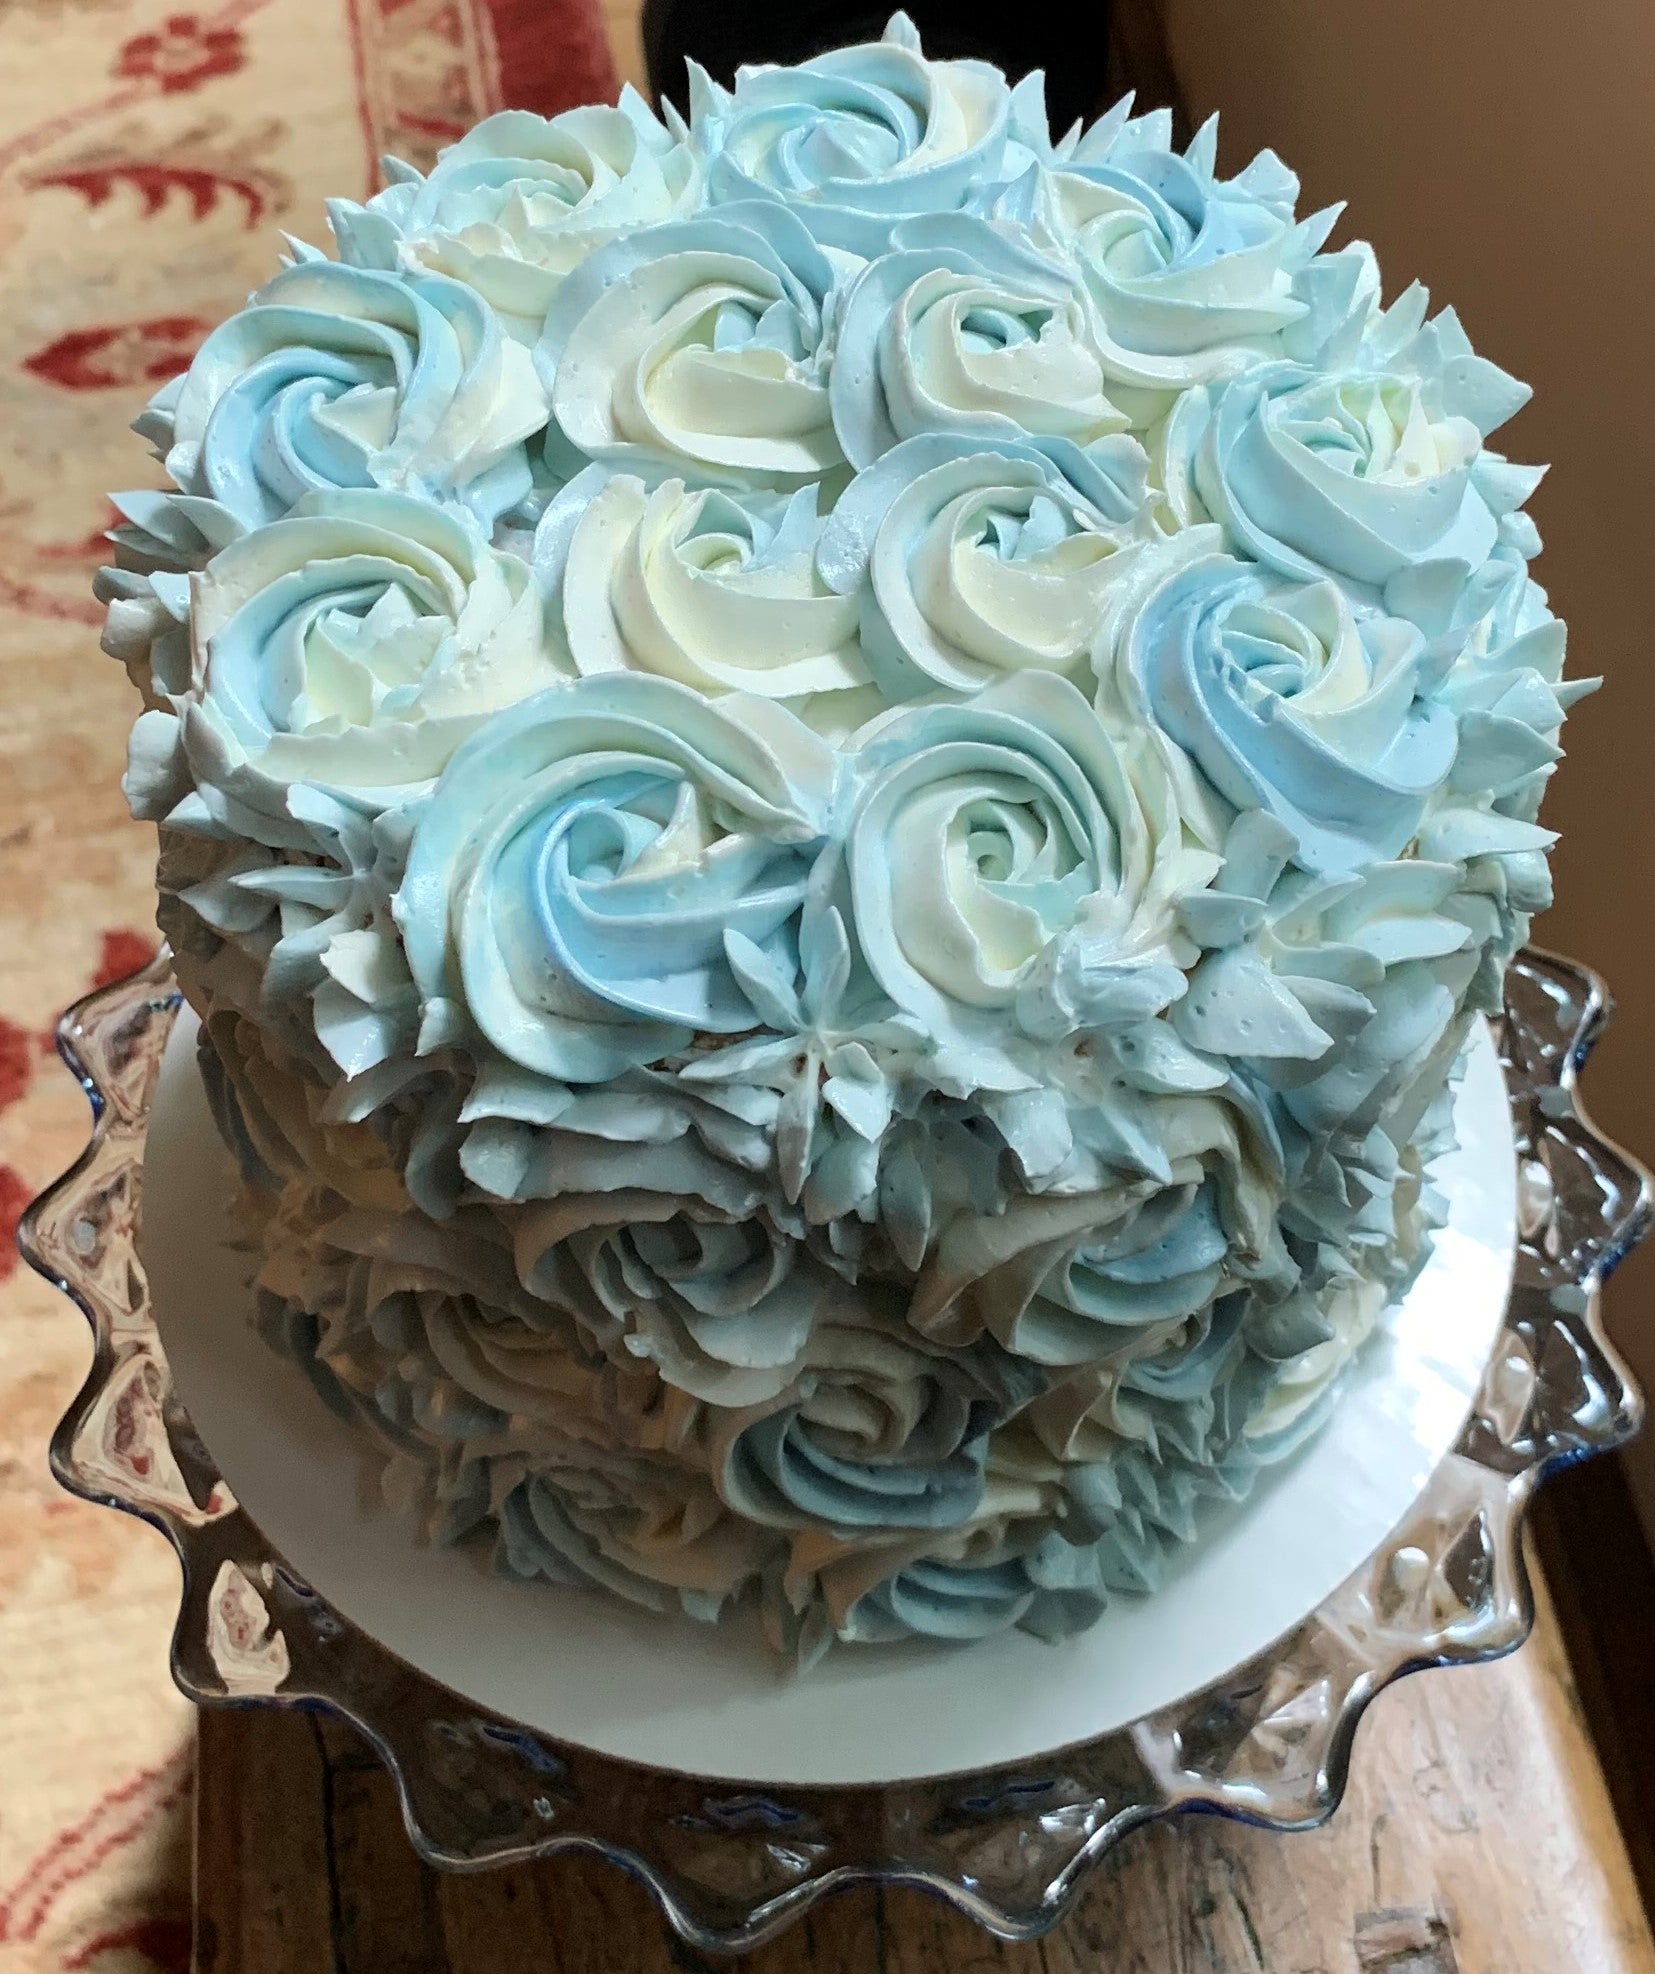 Giant Rosette Layer Cake - Classy Girl Cupcakes